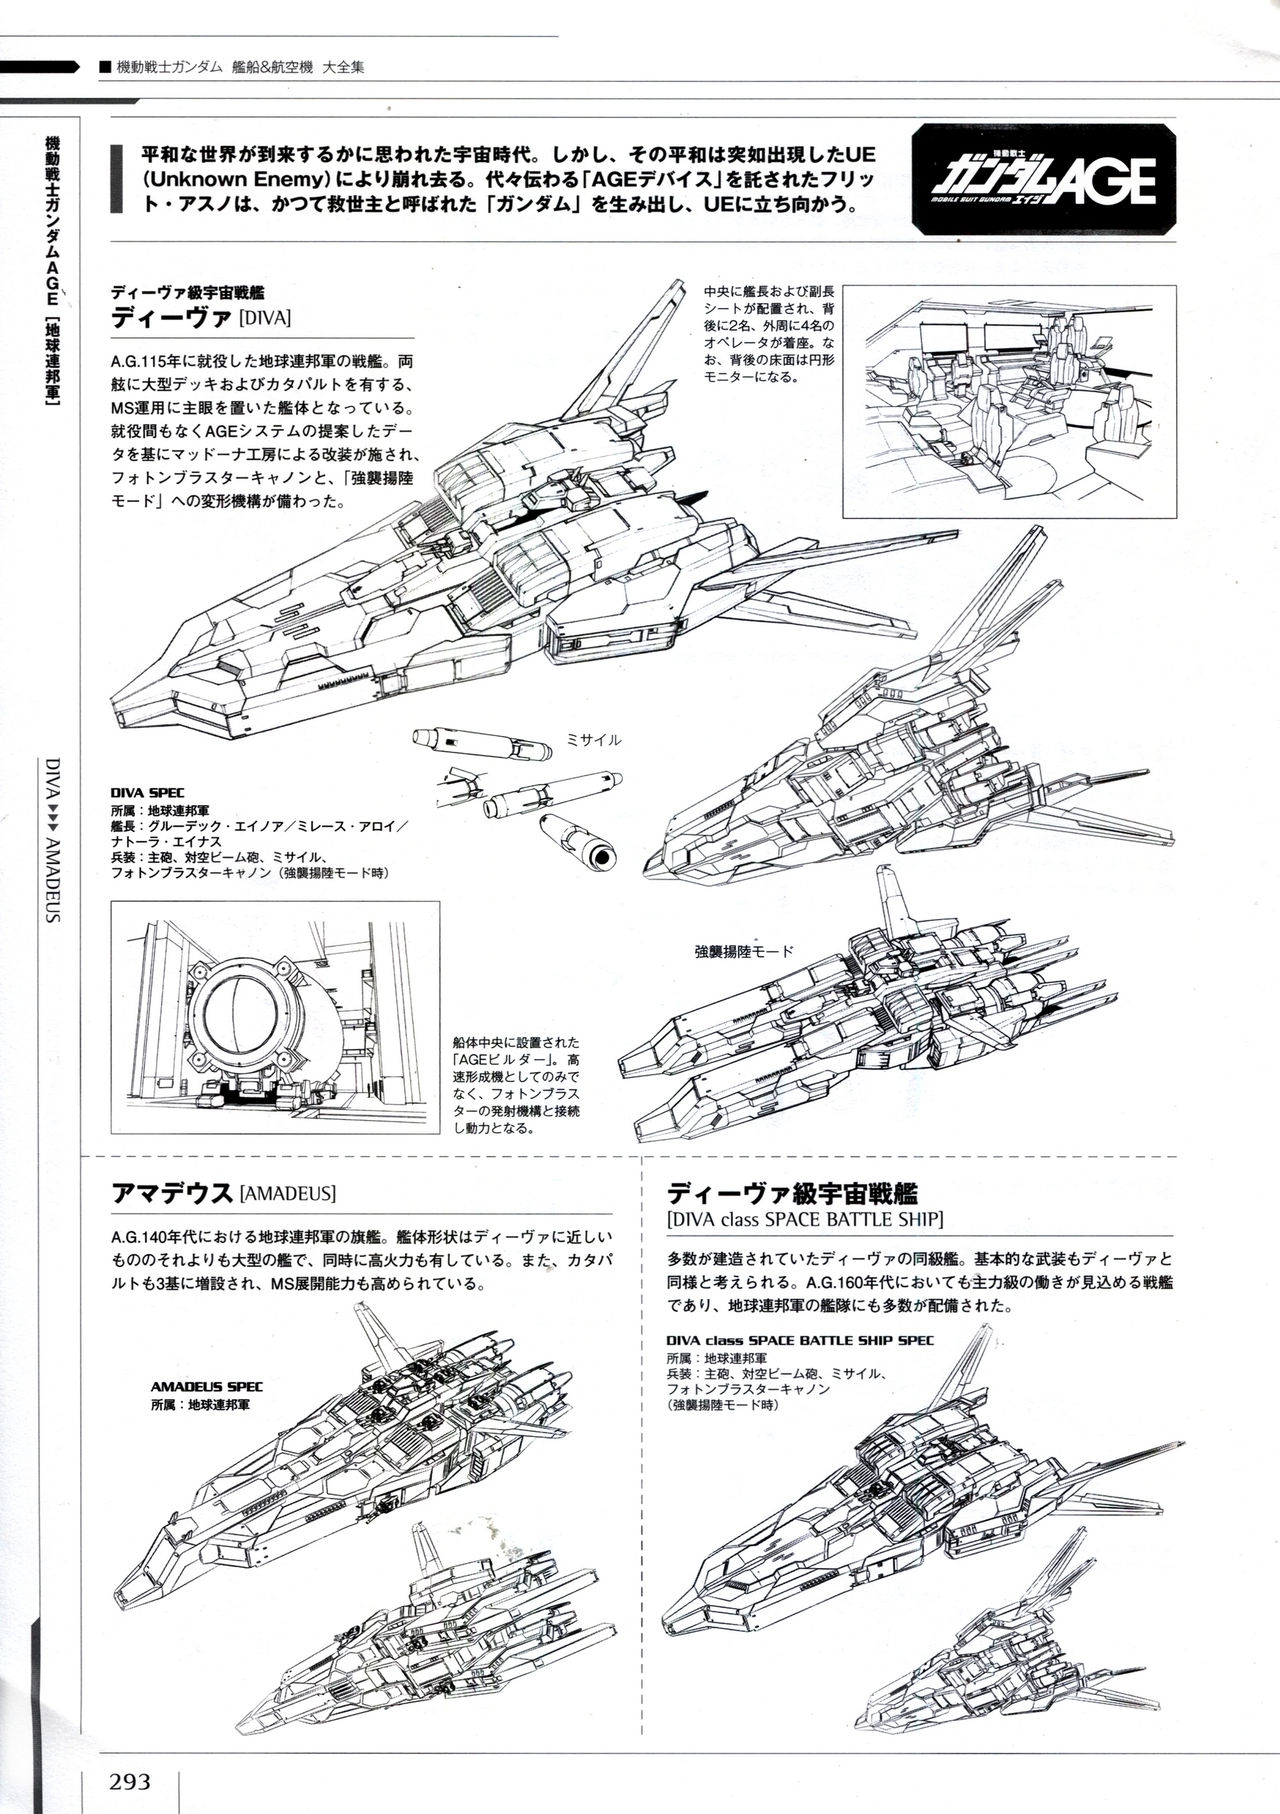 Mobile Suit Gundam - Ship & Aerospace Plane Encyclopedia - Revised Edition 298